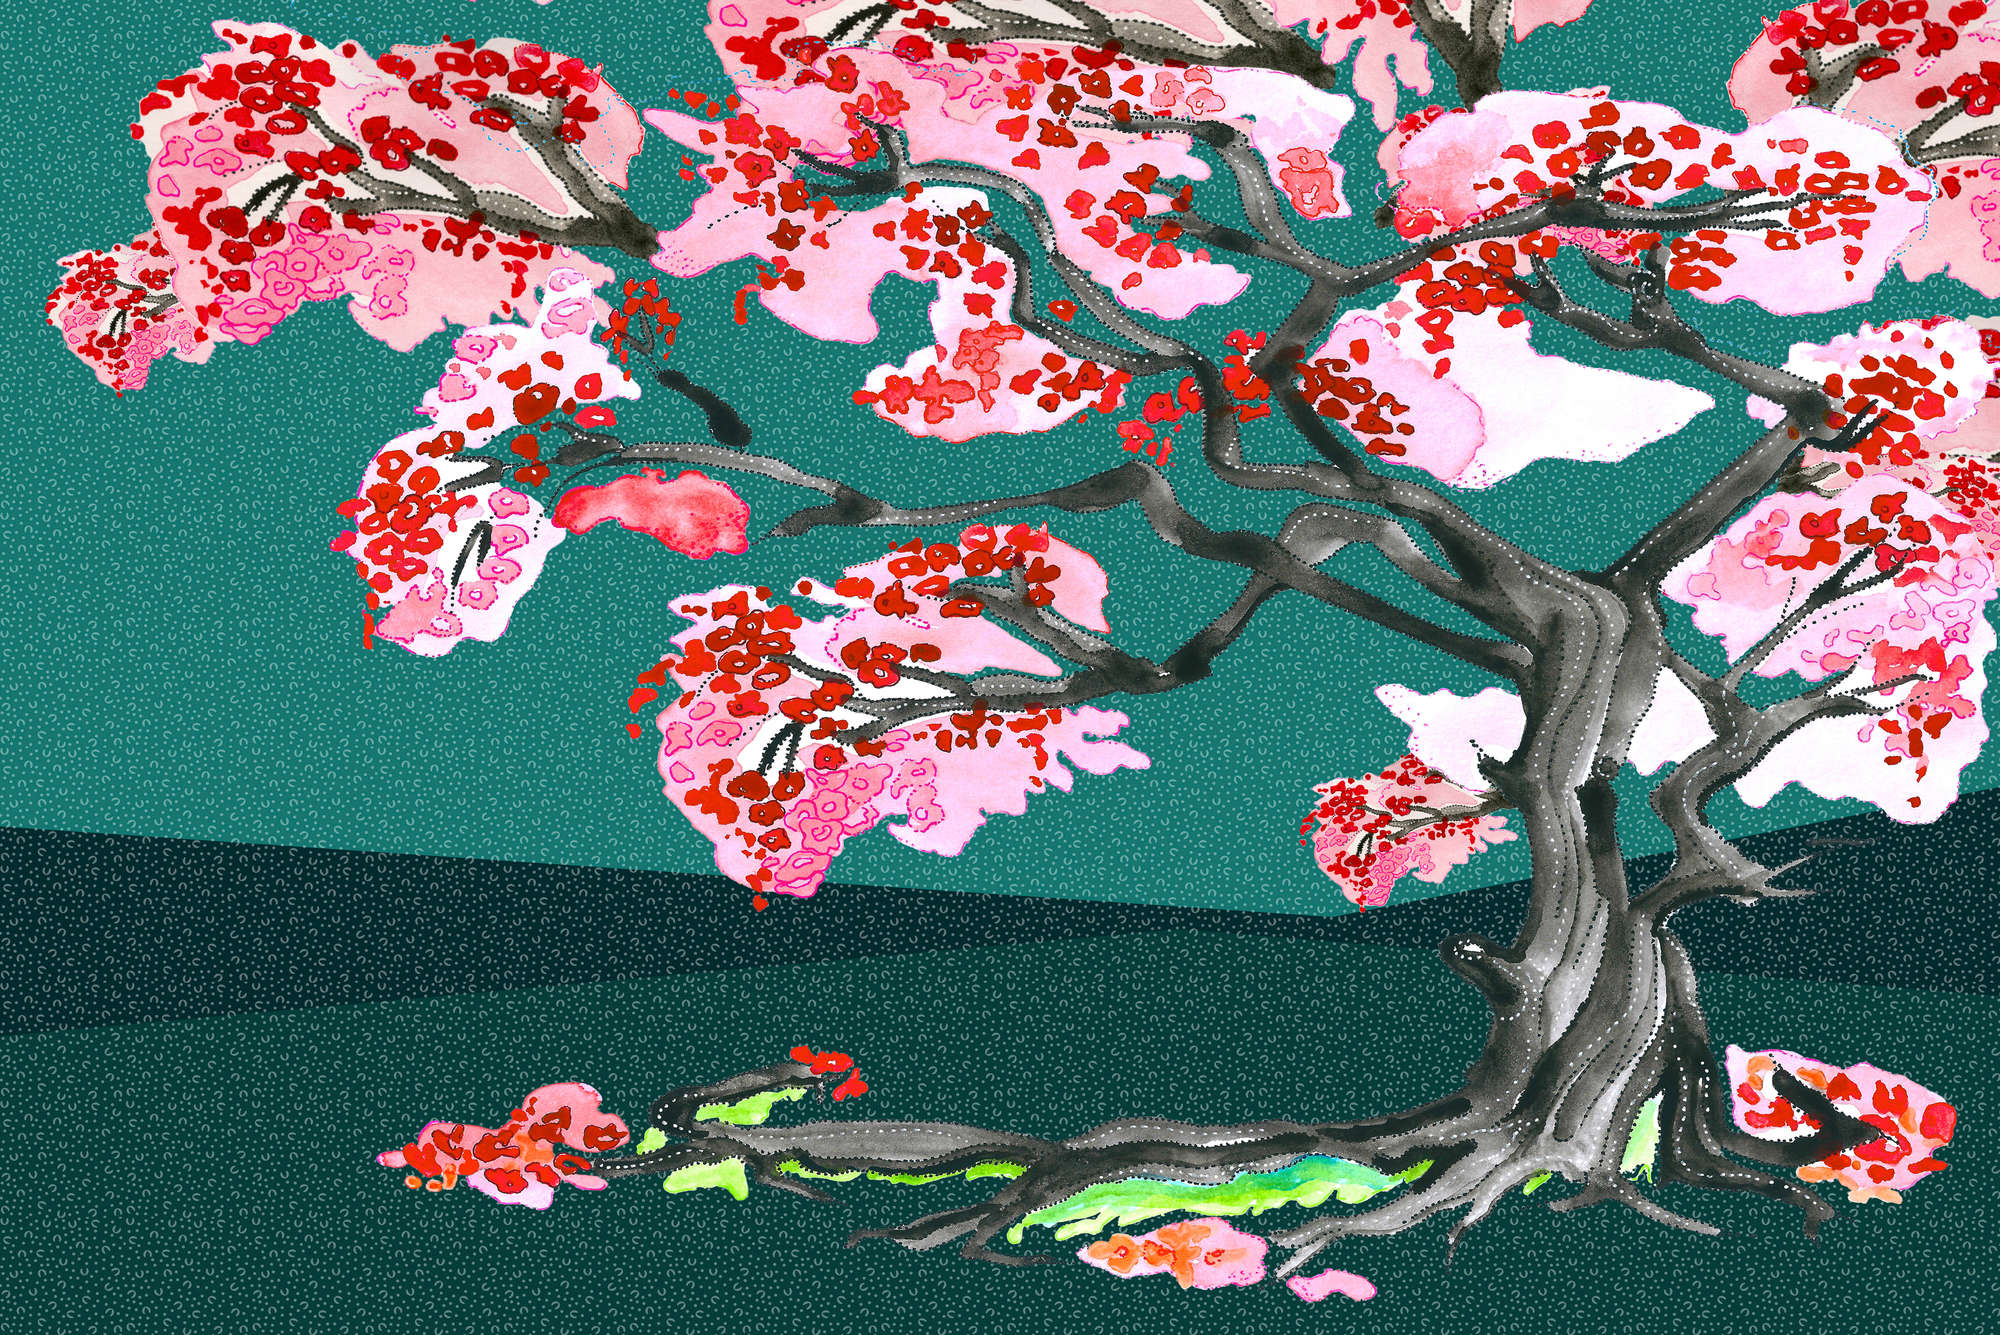             Kirschblüten Fototapete im Asian Comic Stil auf Perlmutt Glattvlies
        